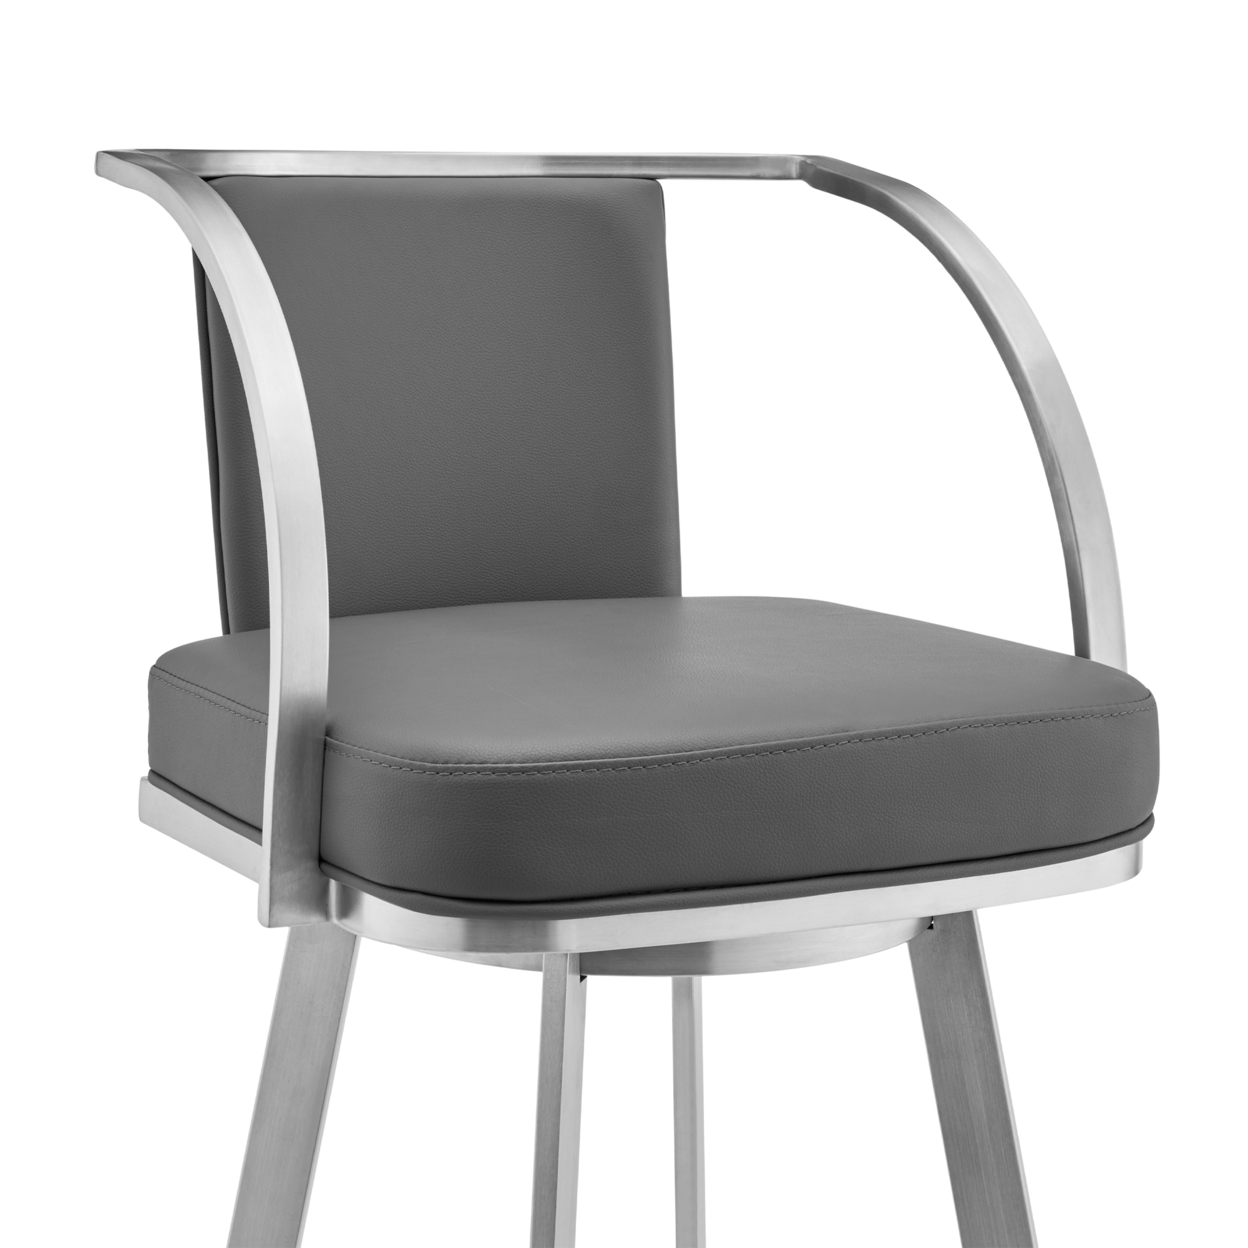 Ovn 30 Inch Swivel Barstool Chair, Gray Faux Leather, Stainless Steel Frame- Saltoro Sherpi